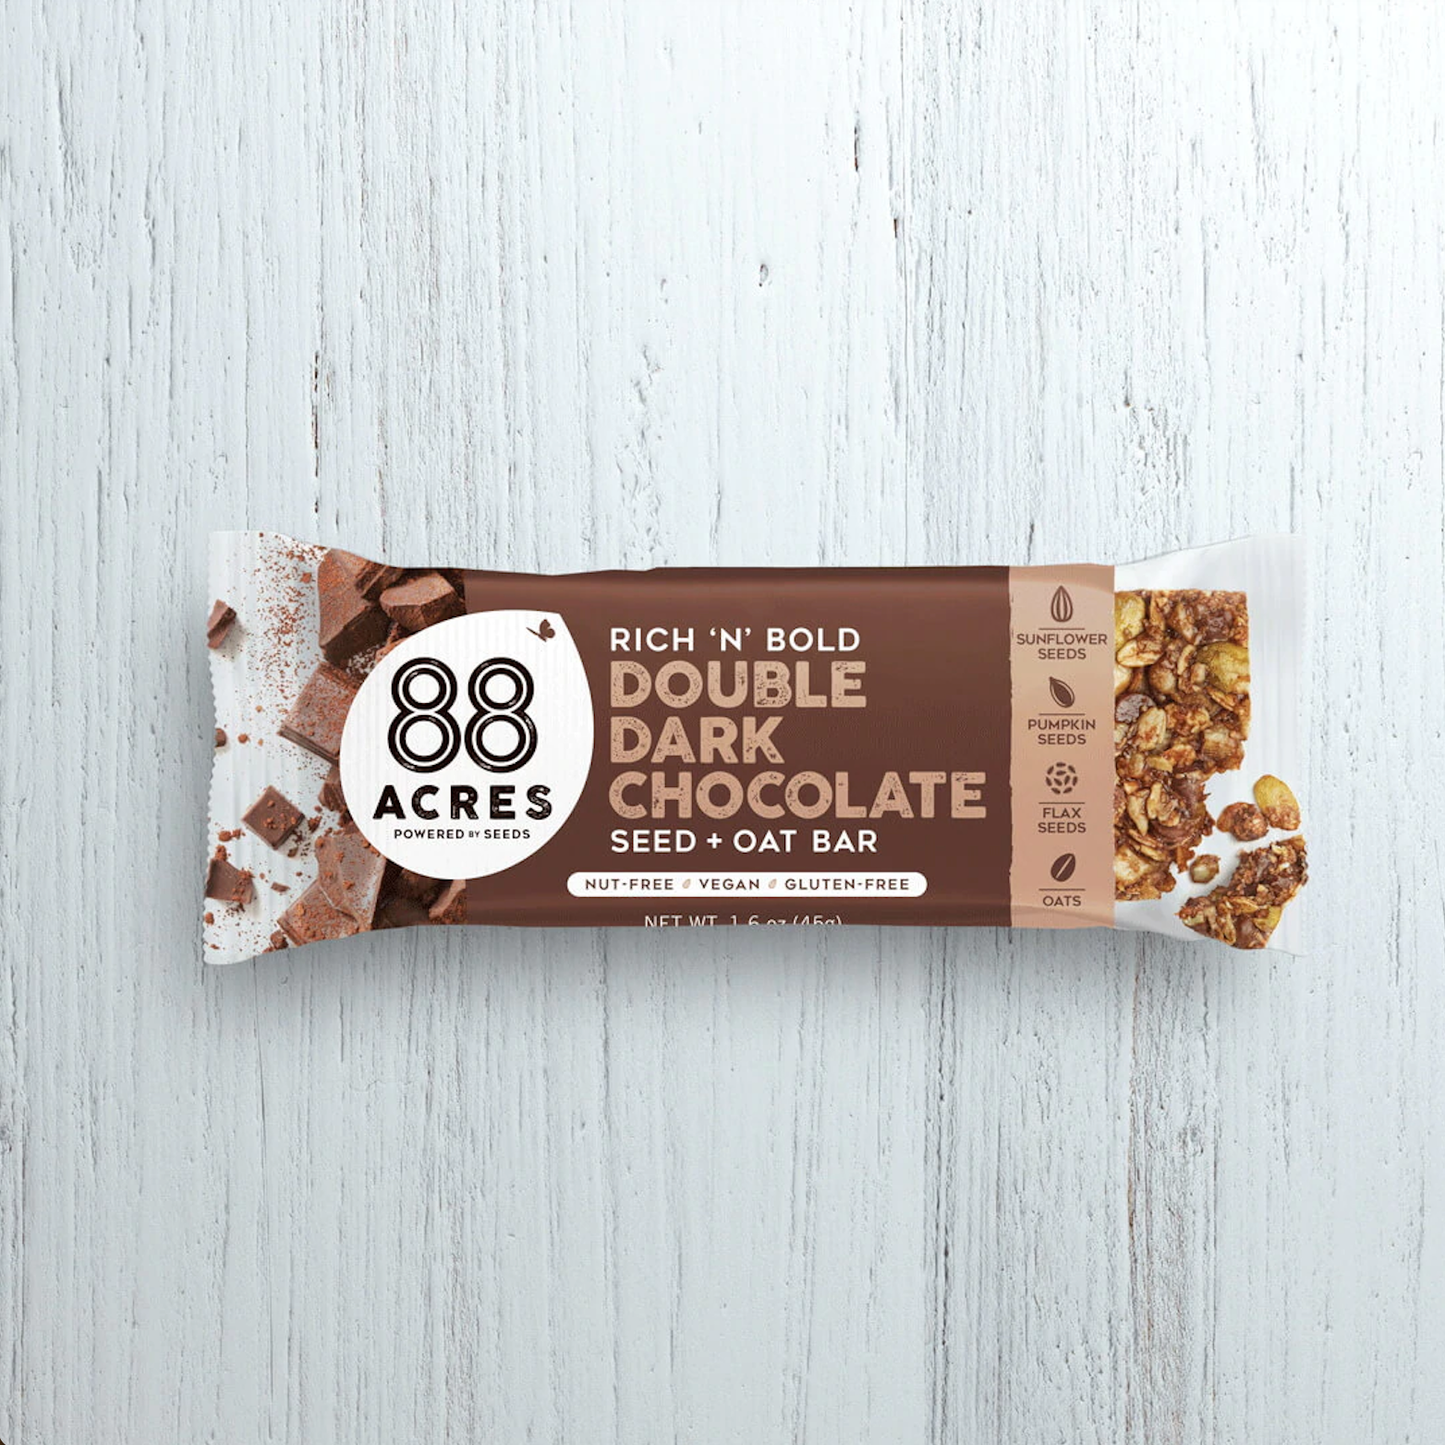 Double Dark Chocolate Seed + Oat Bar